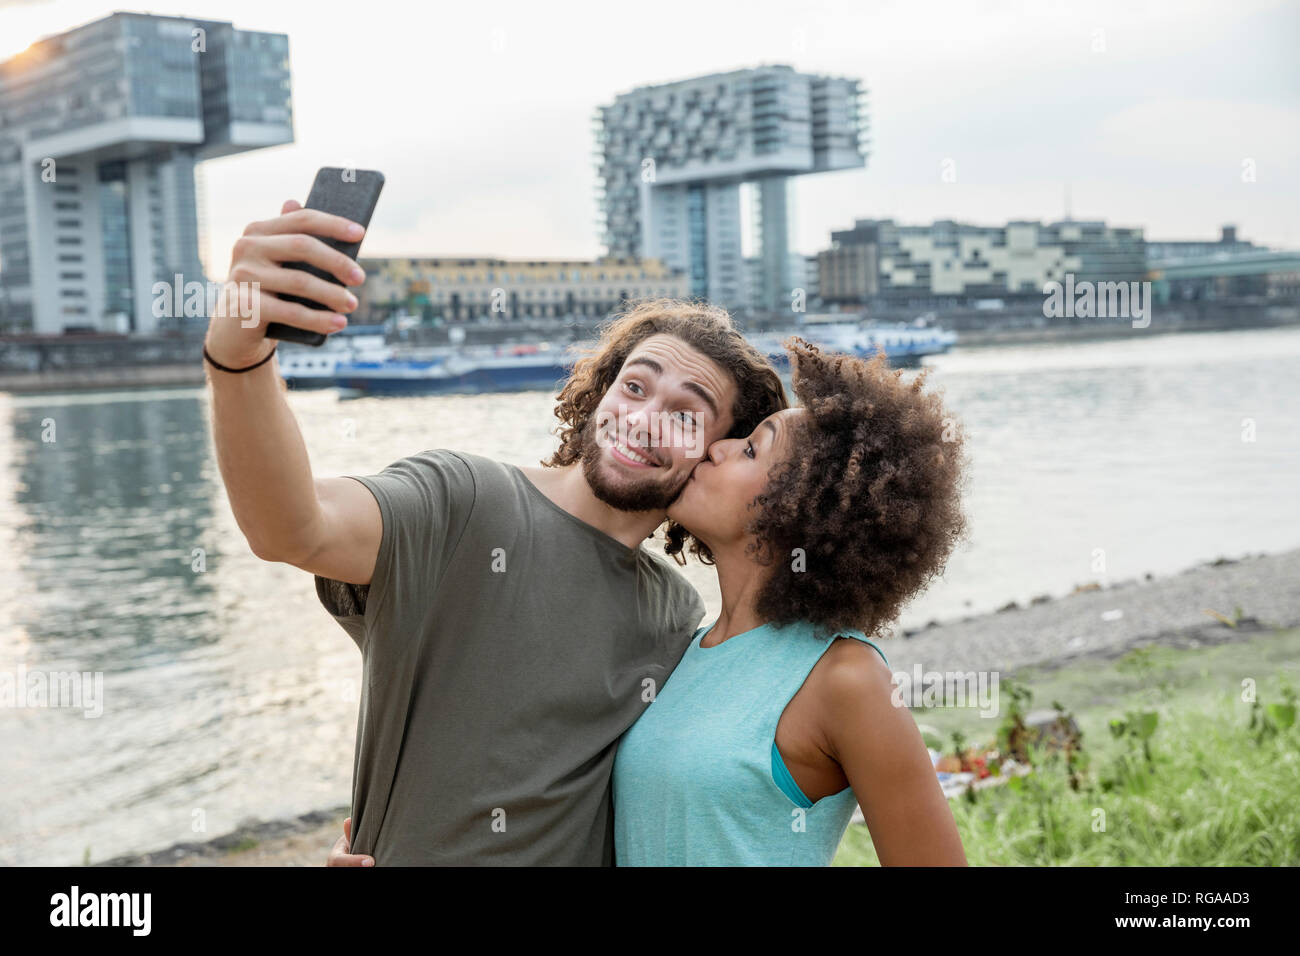 Germania, Colonia, felice coppia prendendo un selfie al Riverside Foto Stock